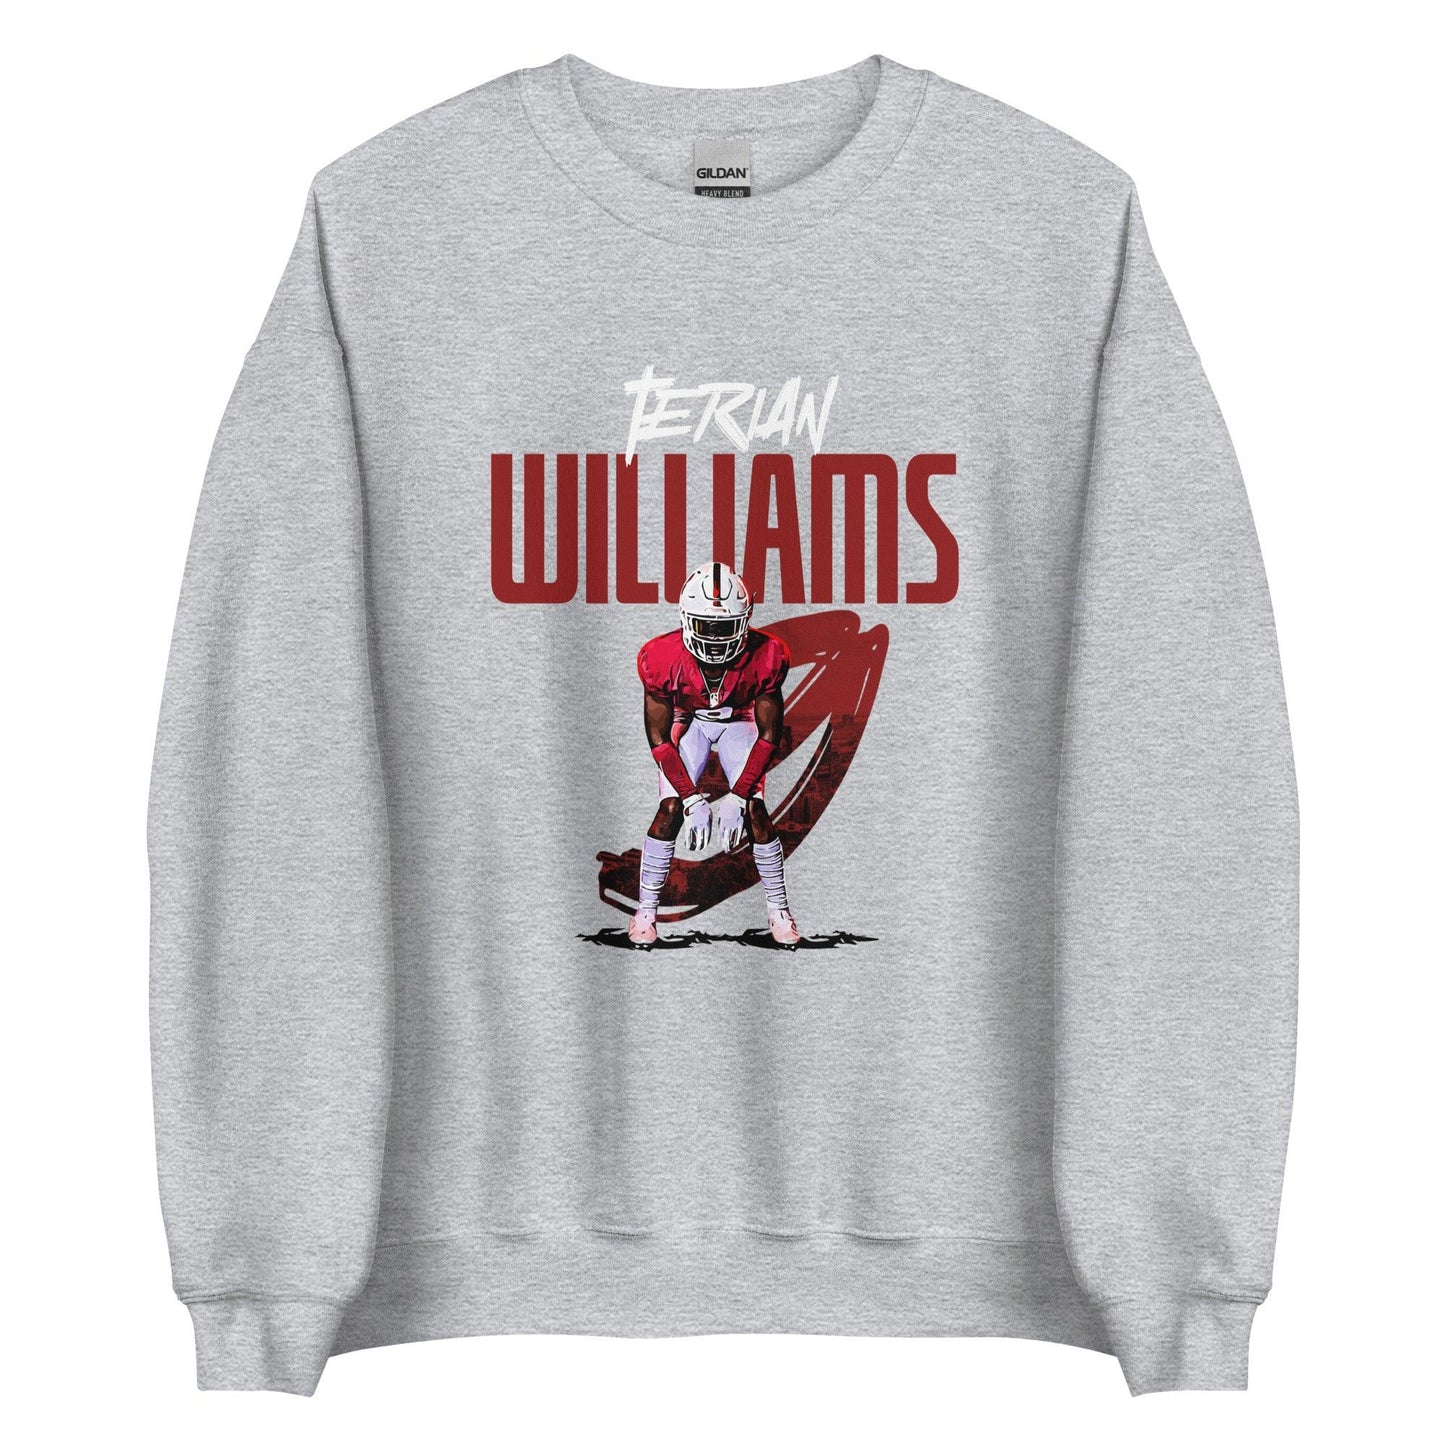 Terian Williams "Gameday" Sweatshirt - Fan Arch